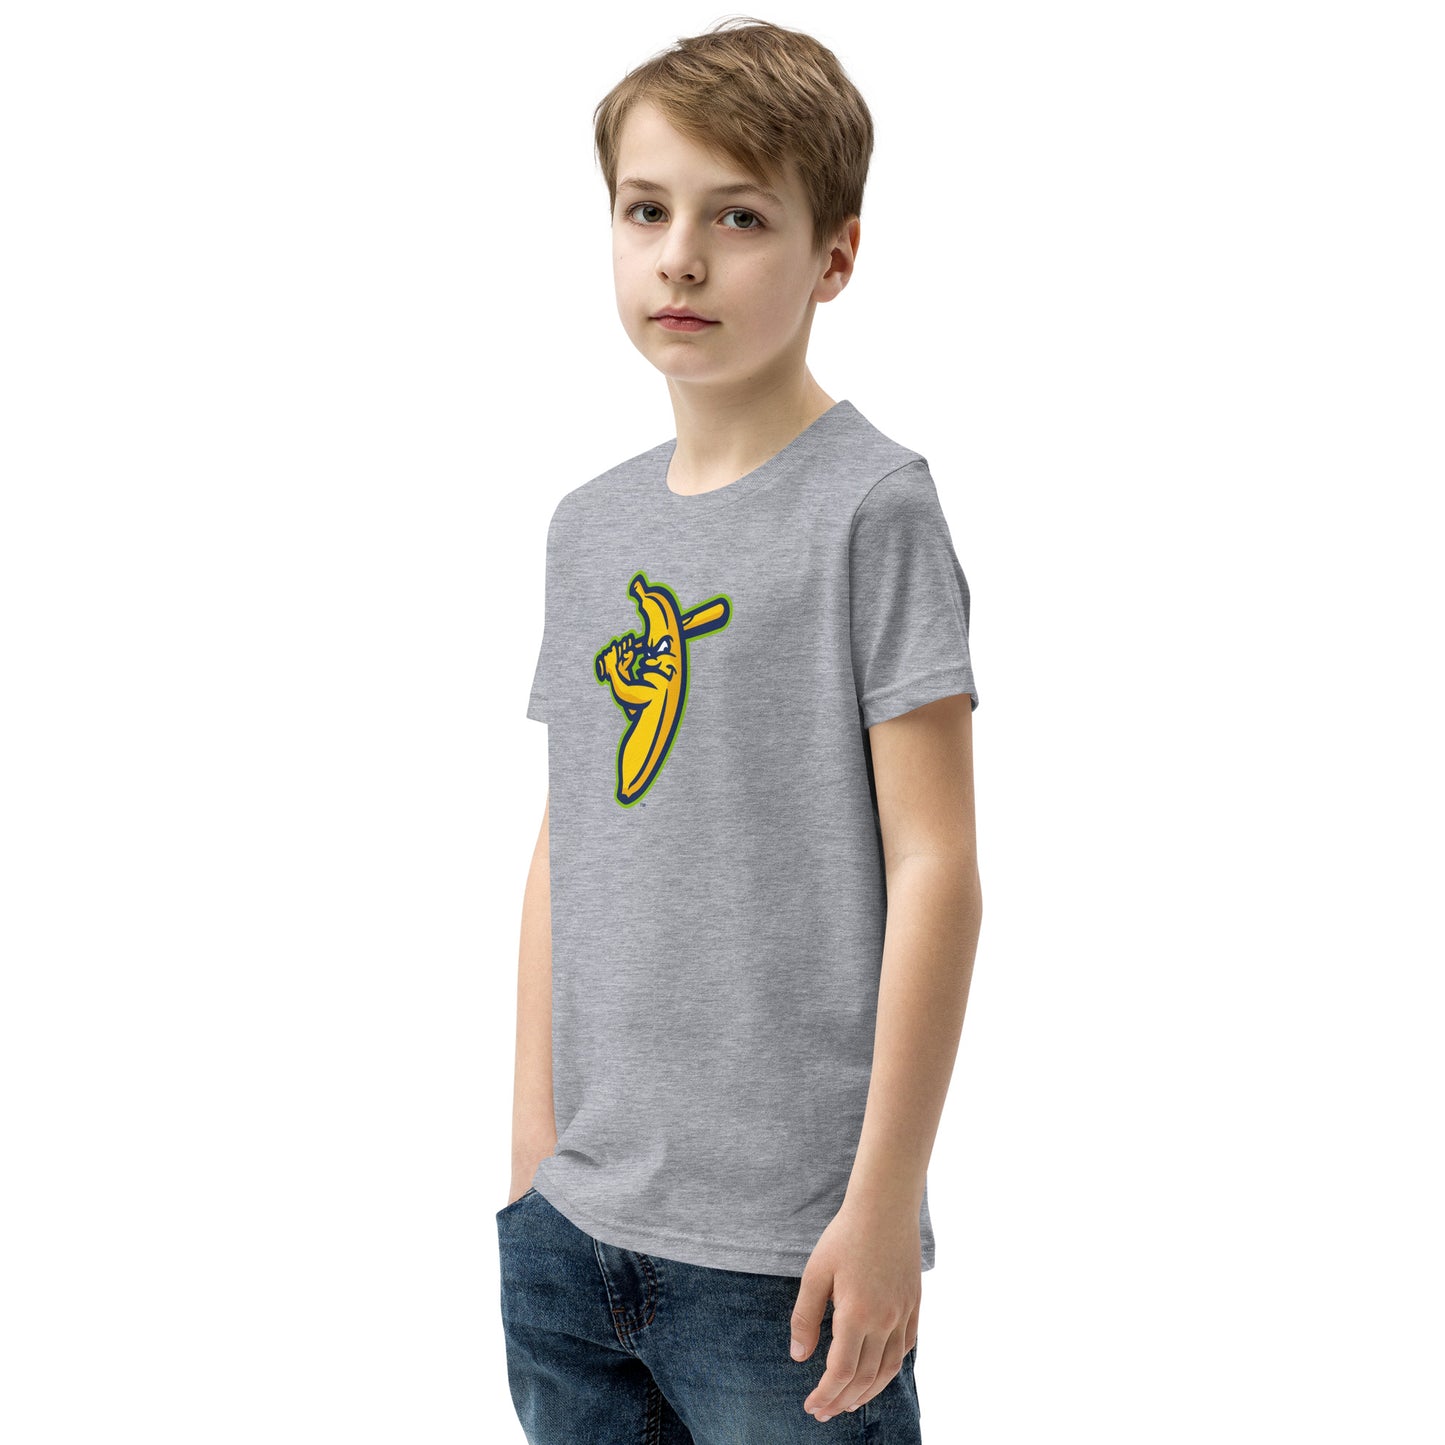 Banana Simple Youth Short Sleeve T-Shirt